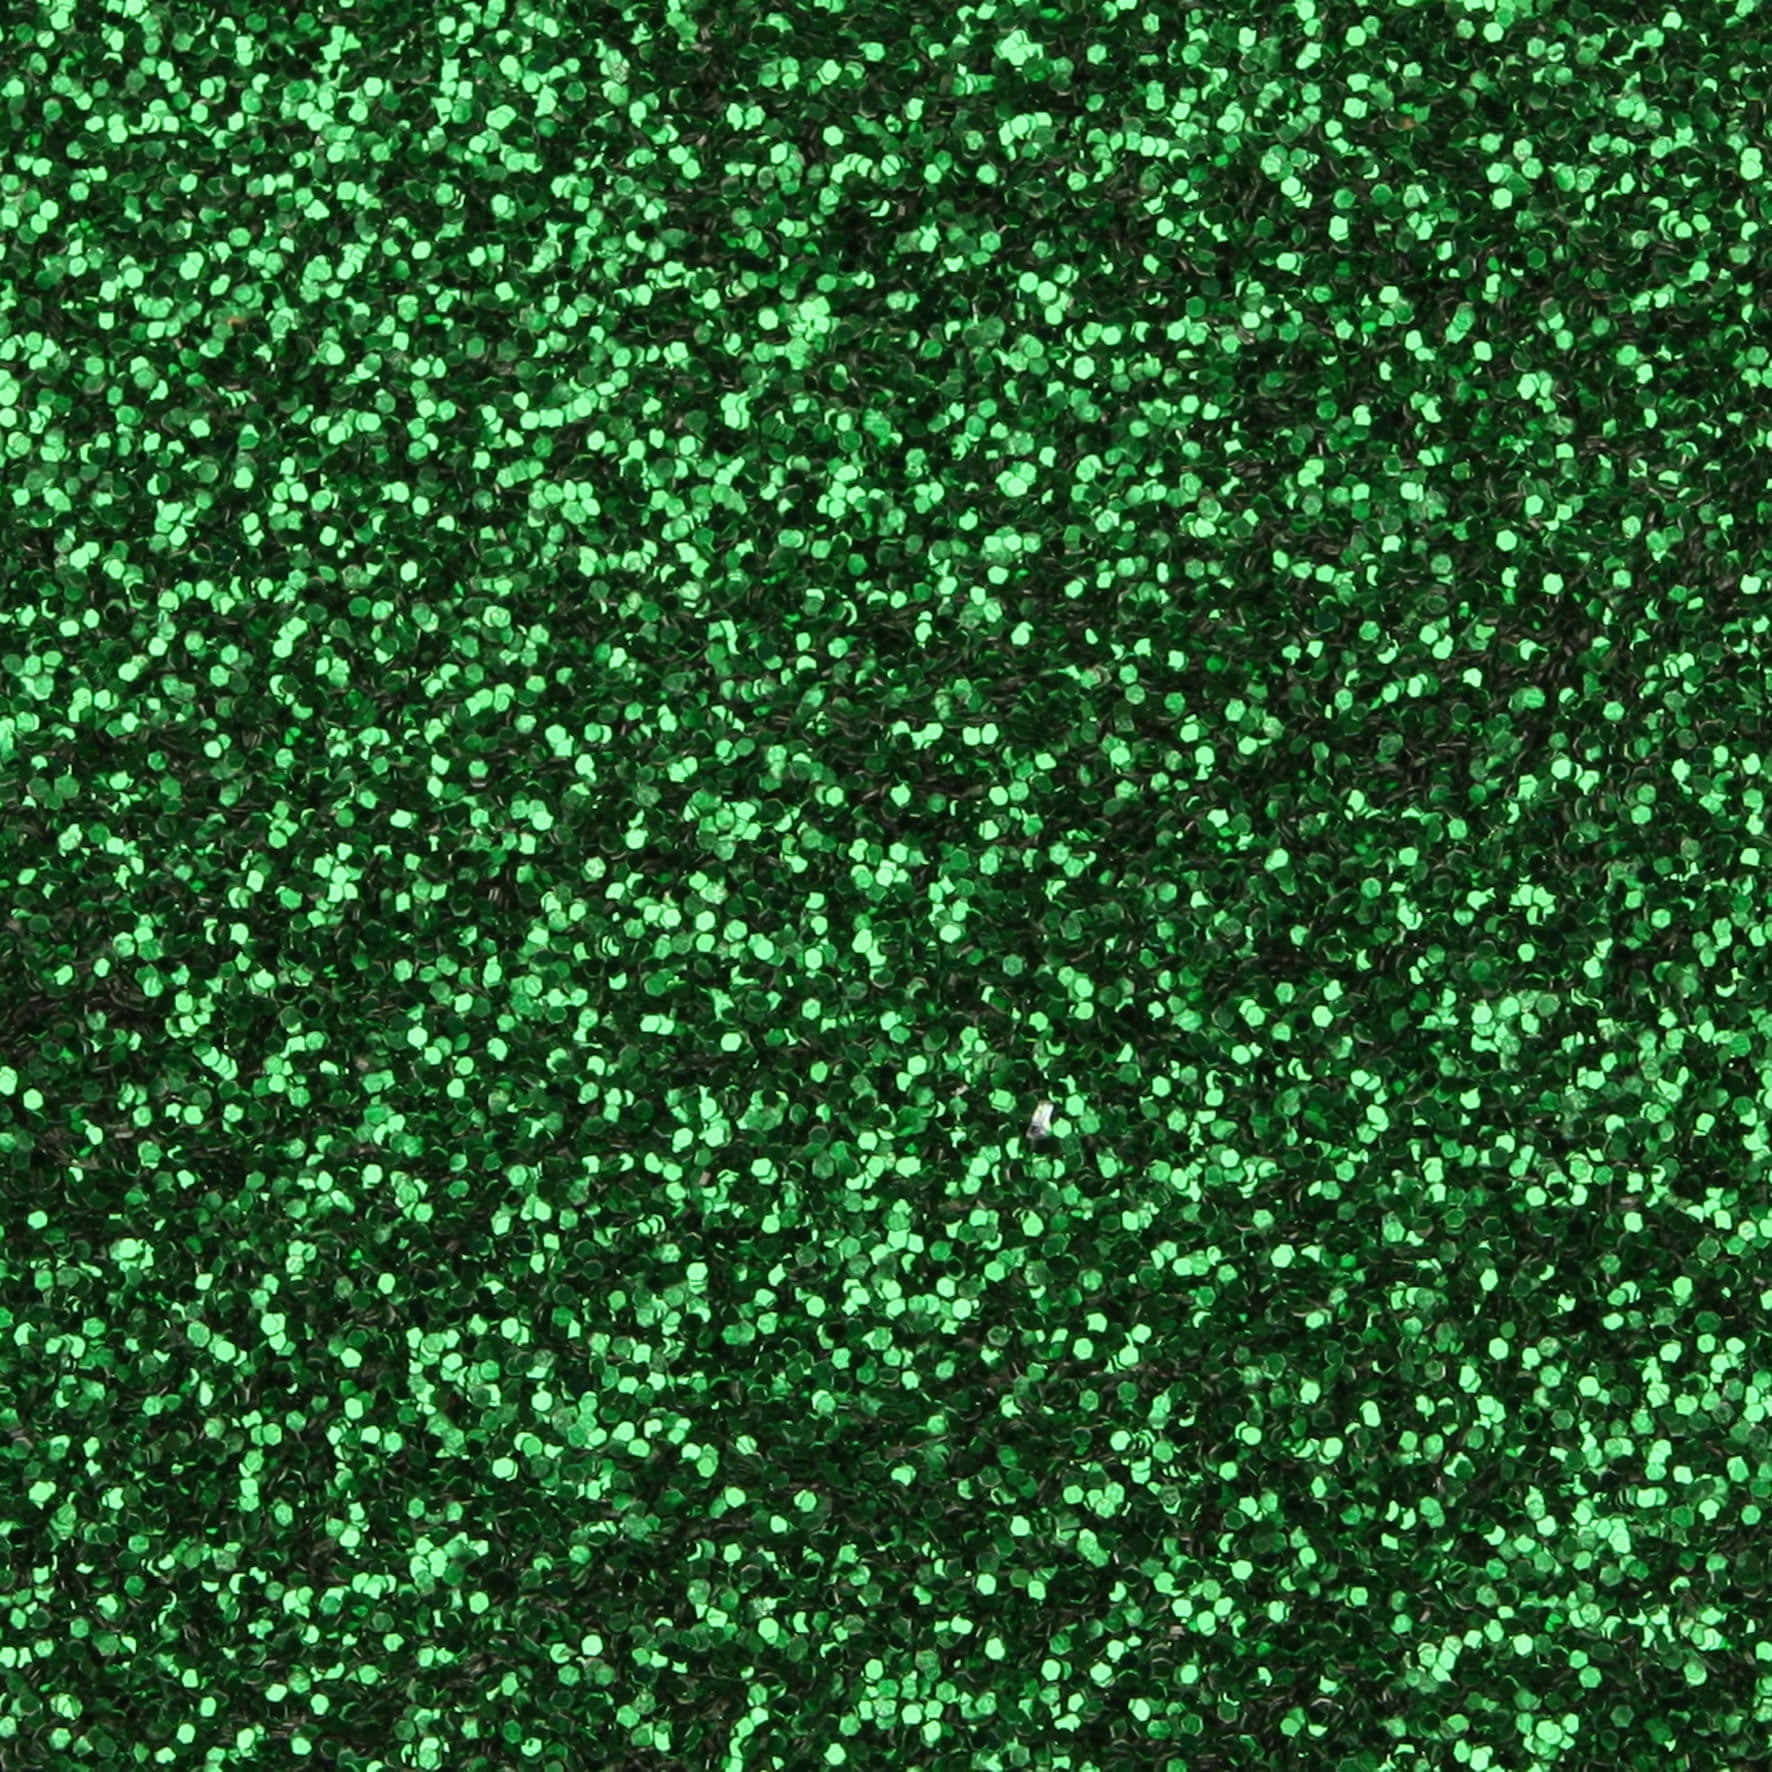 Caption: Vibrant Green Glitter Background